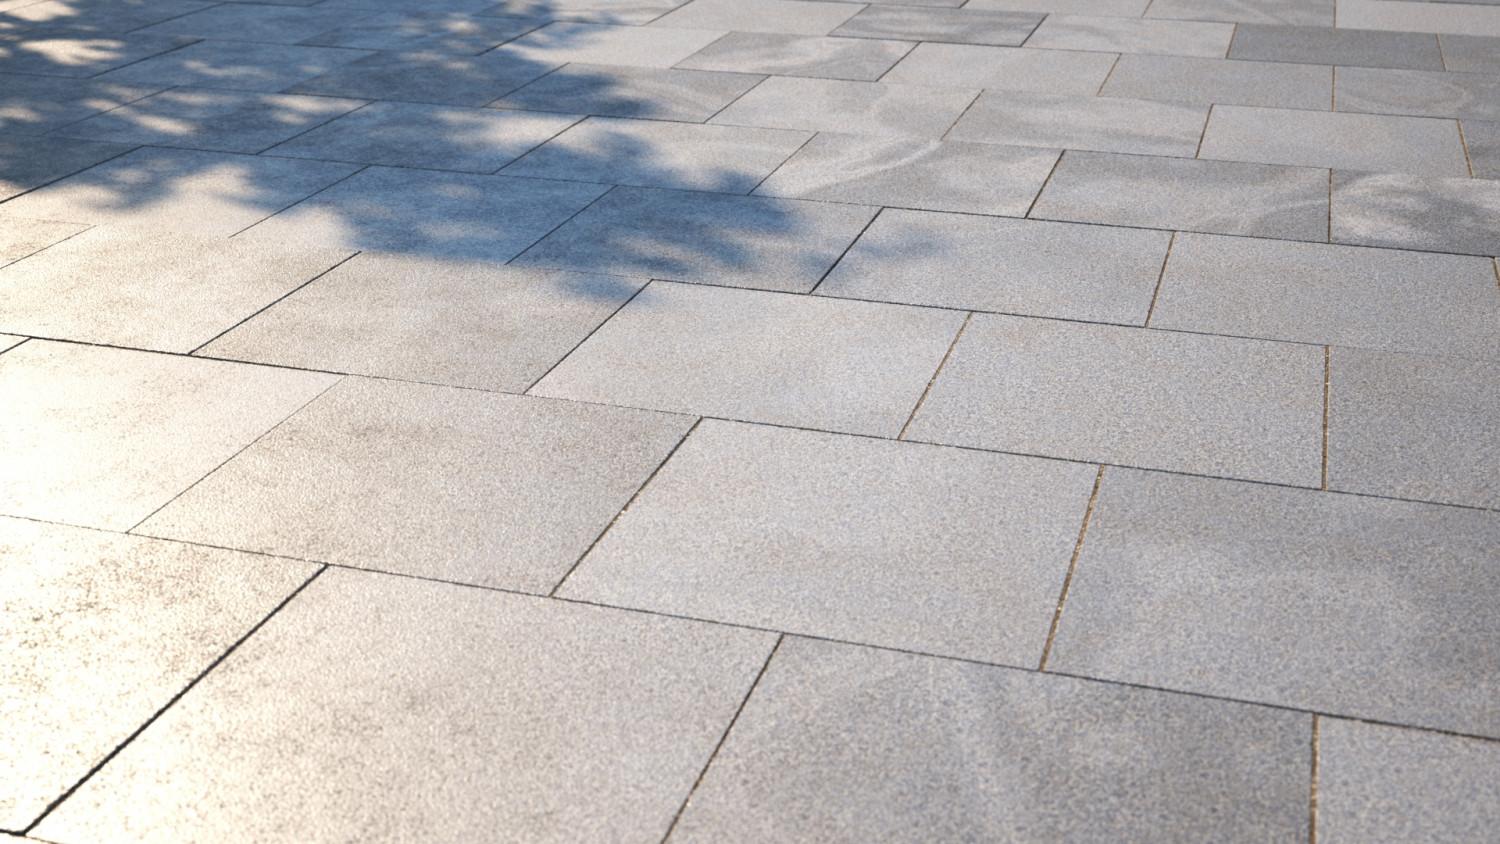 Granite pavement square bricks texture